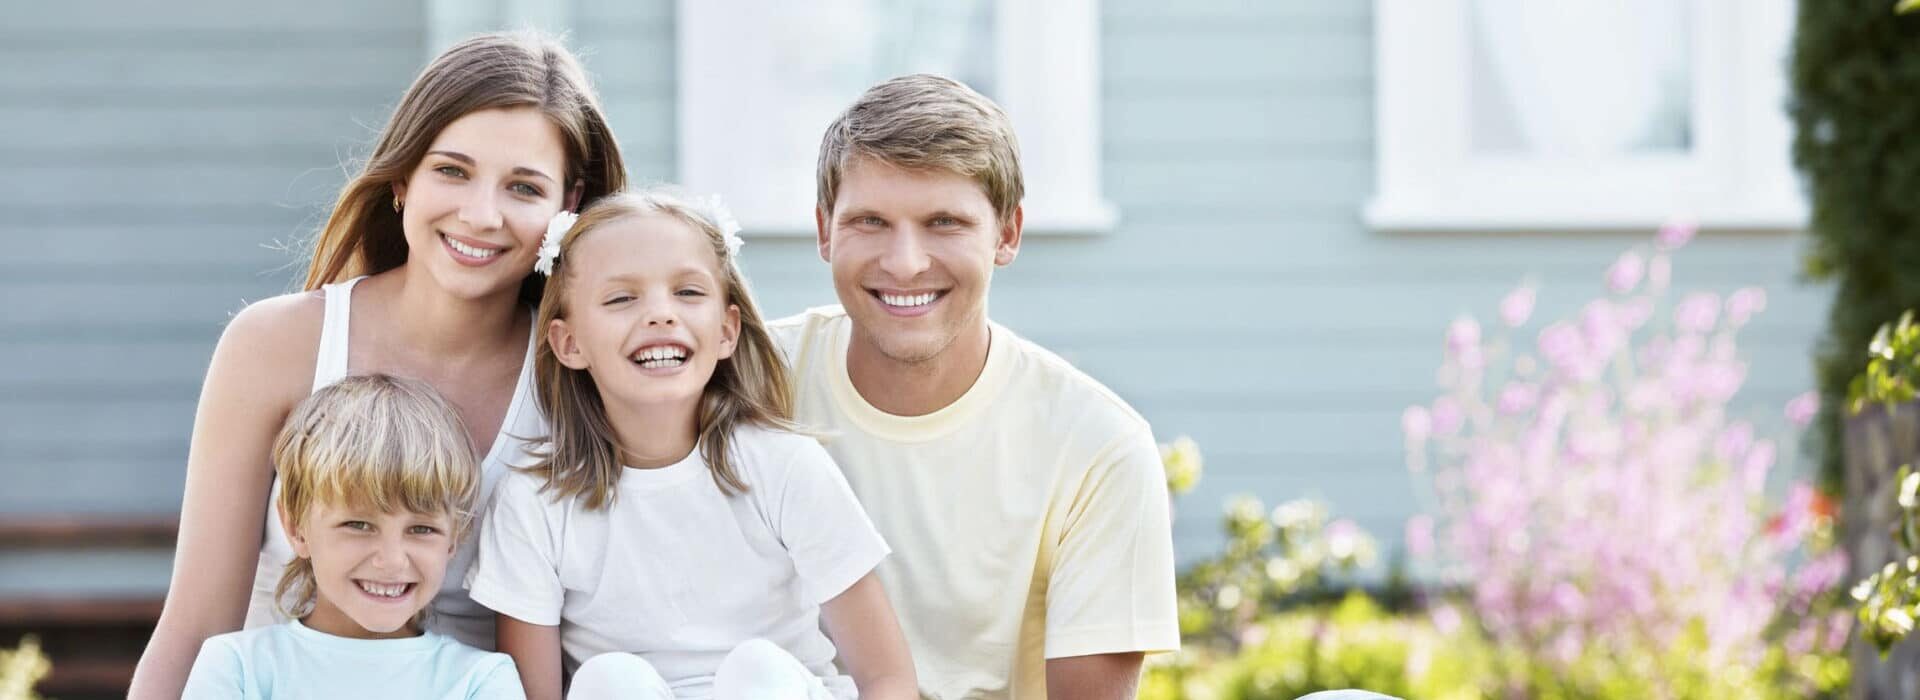 Family smiling - Life Insurance